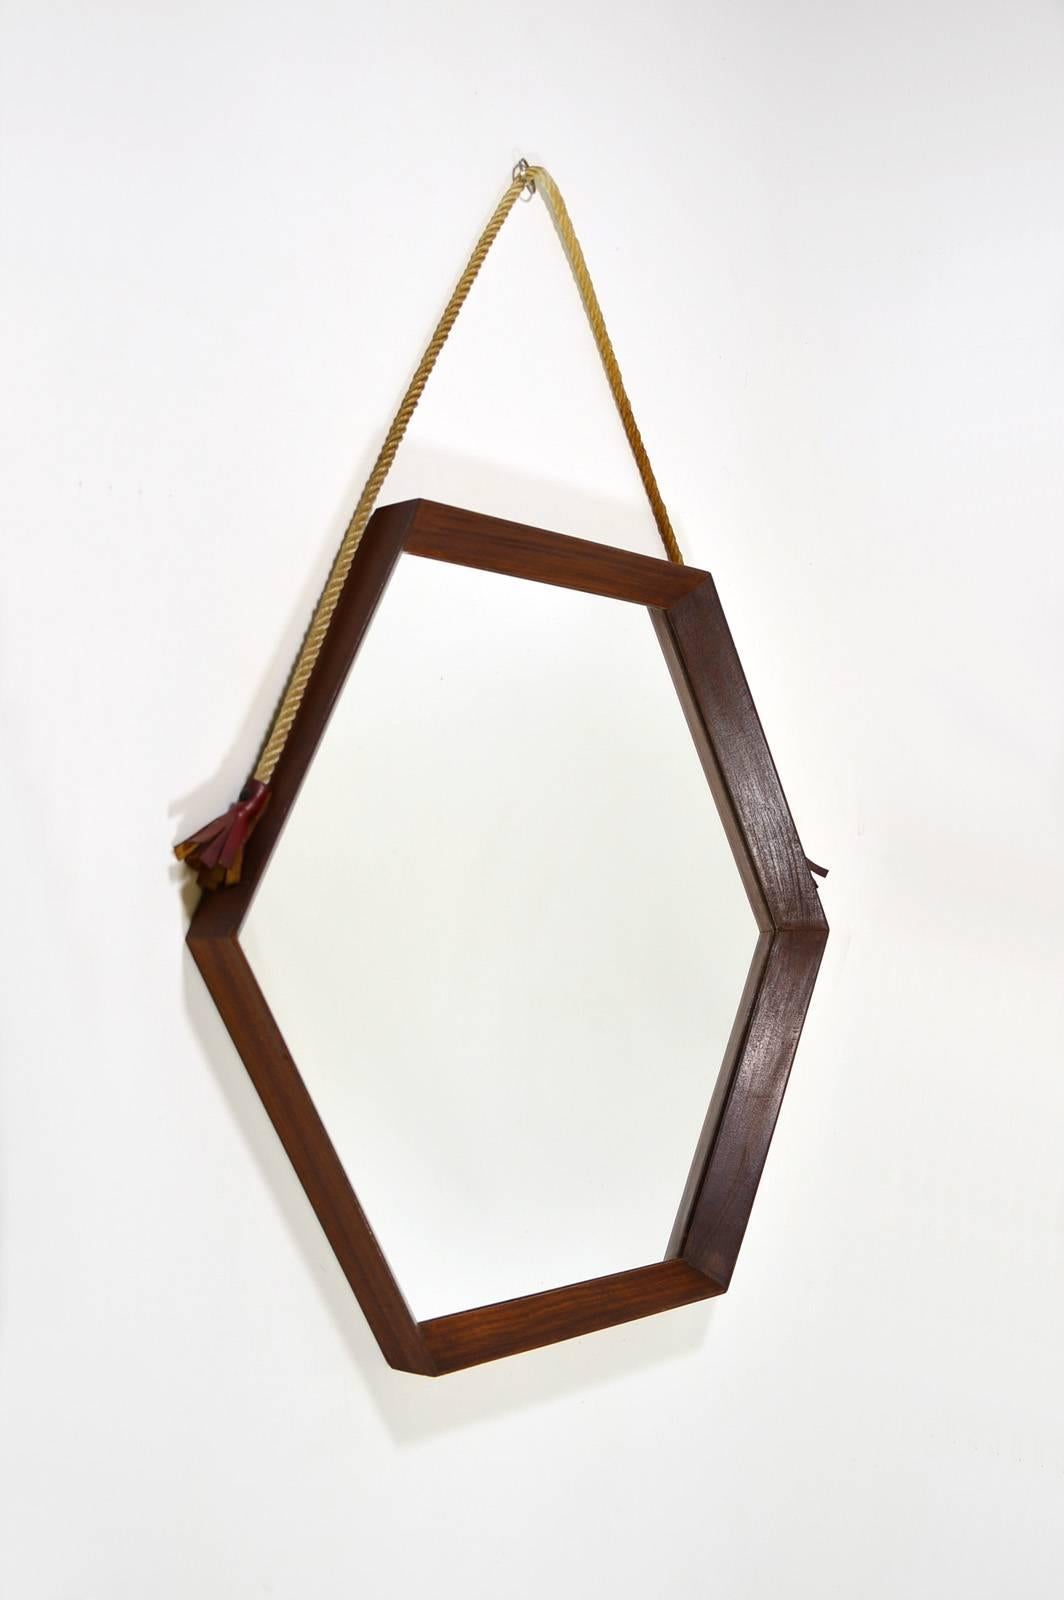 Italian midcentury teak wood hexagonal mirror, in good original condition.